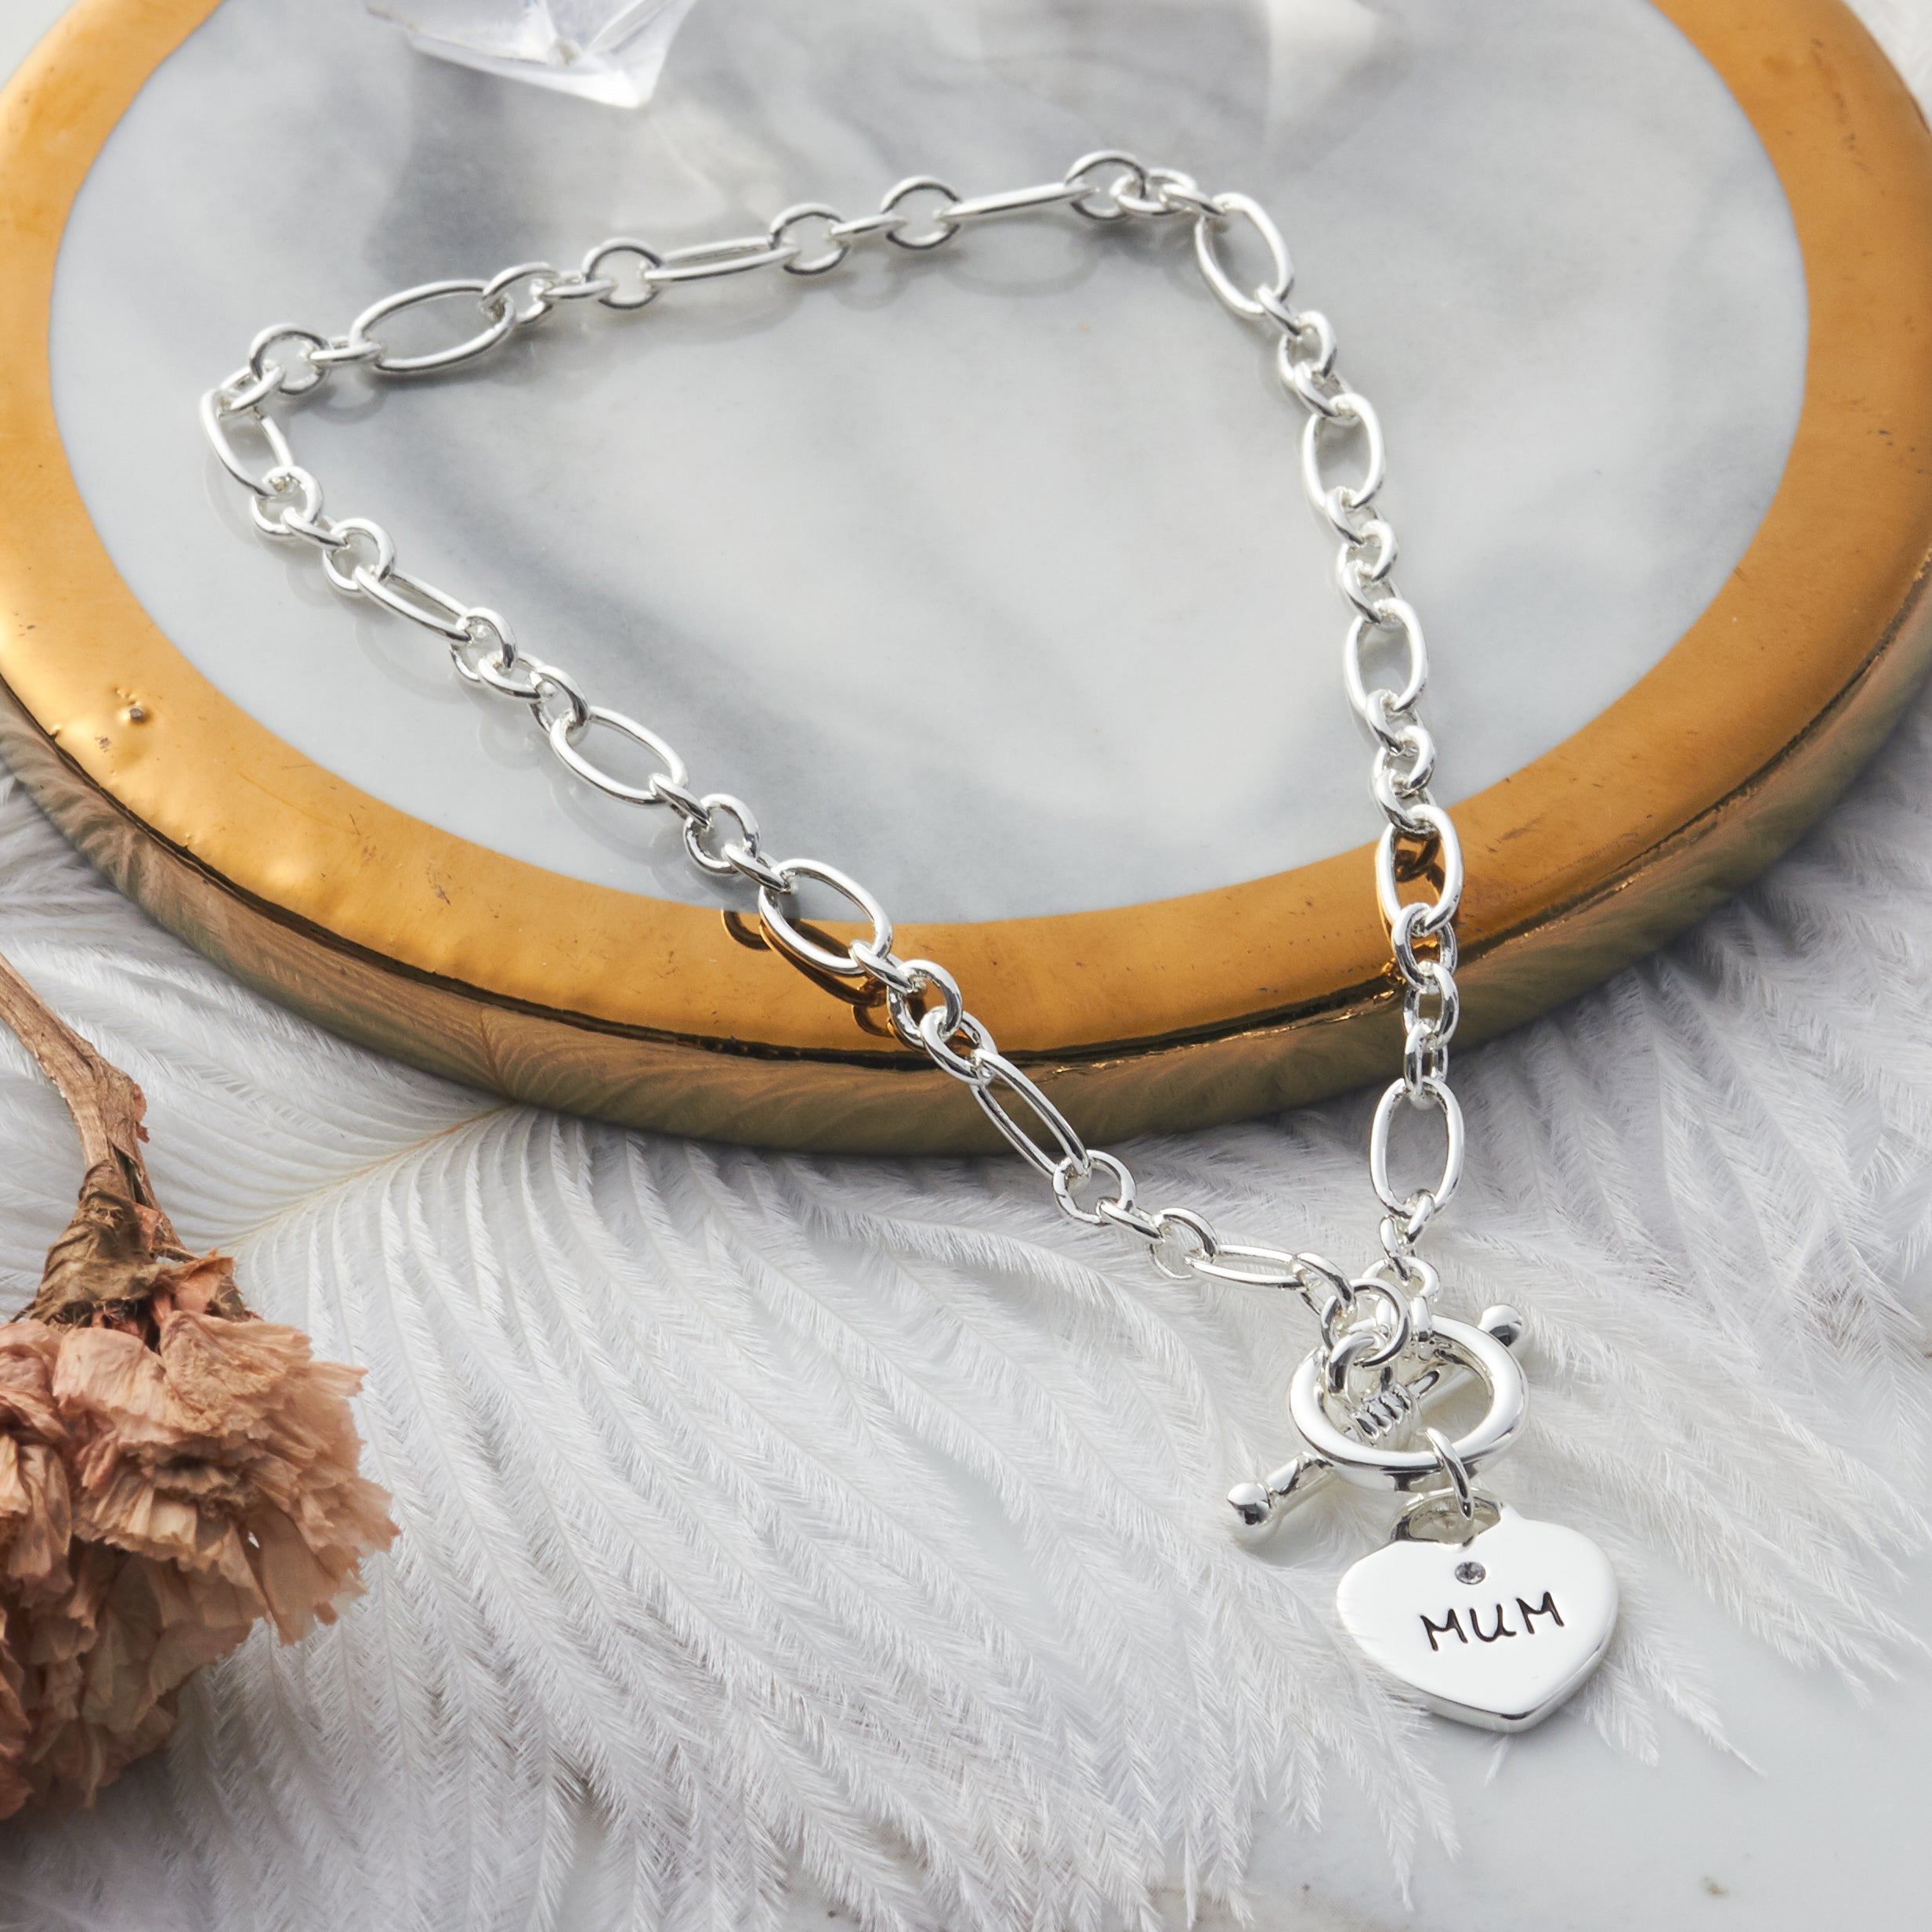 Mum Charm Bracelet Created with Zircondia® Crystals